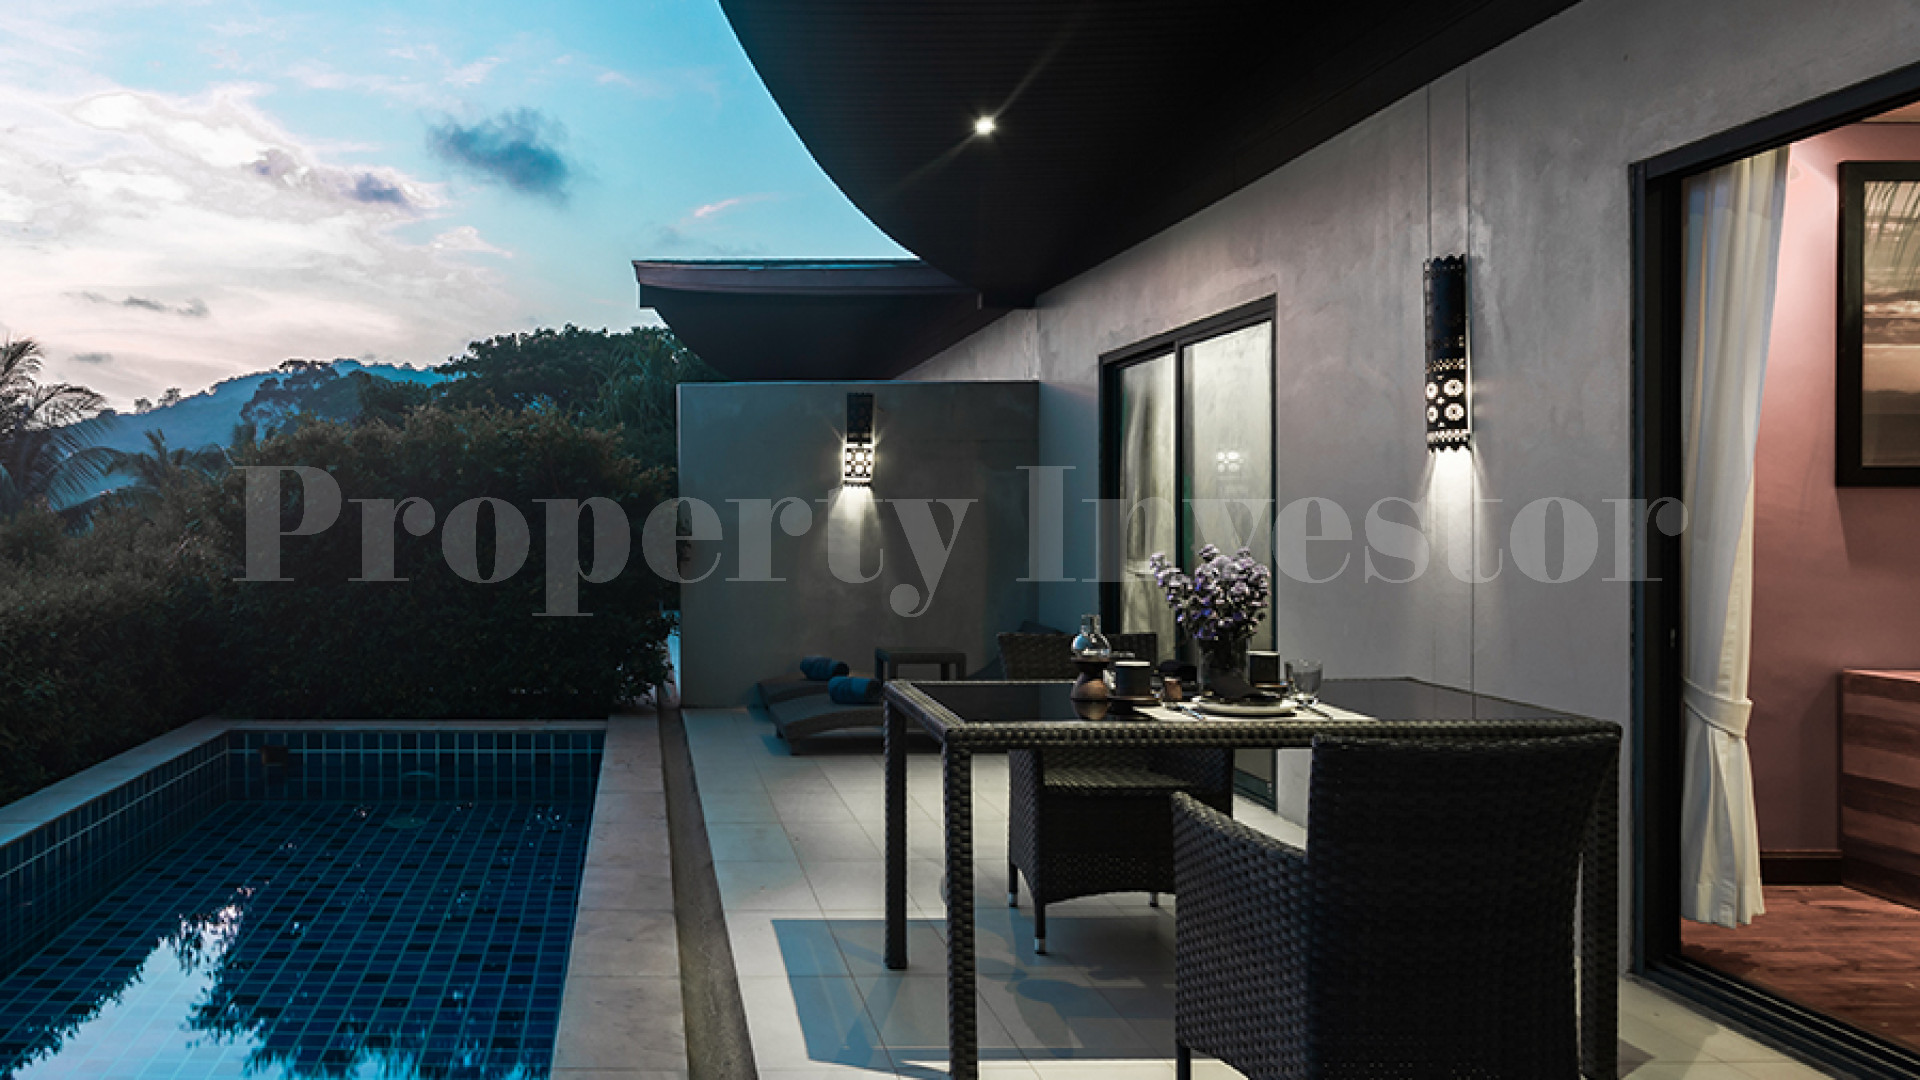 Popular 5* Star Luxury Eco Island Resort for Sale in Phuket